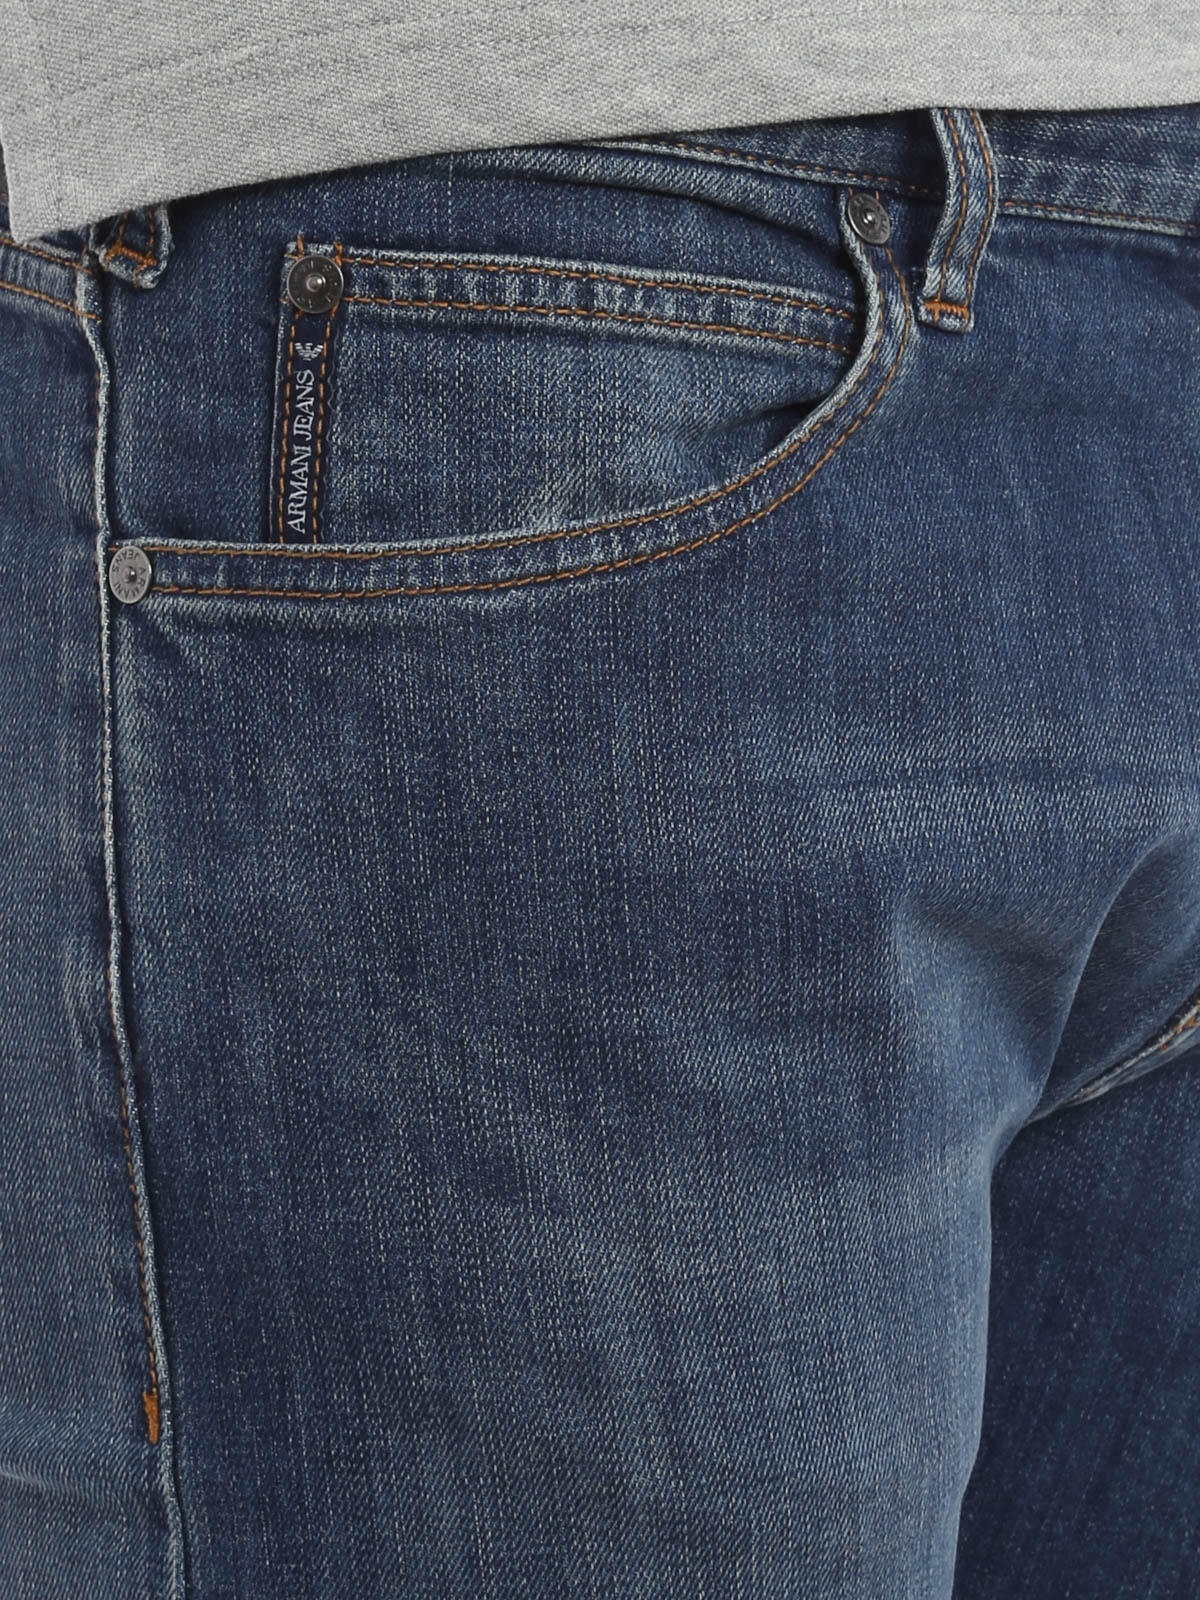 armani jeans buy online